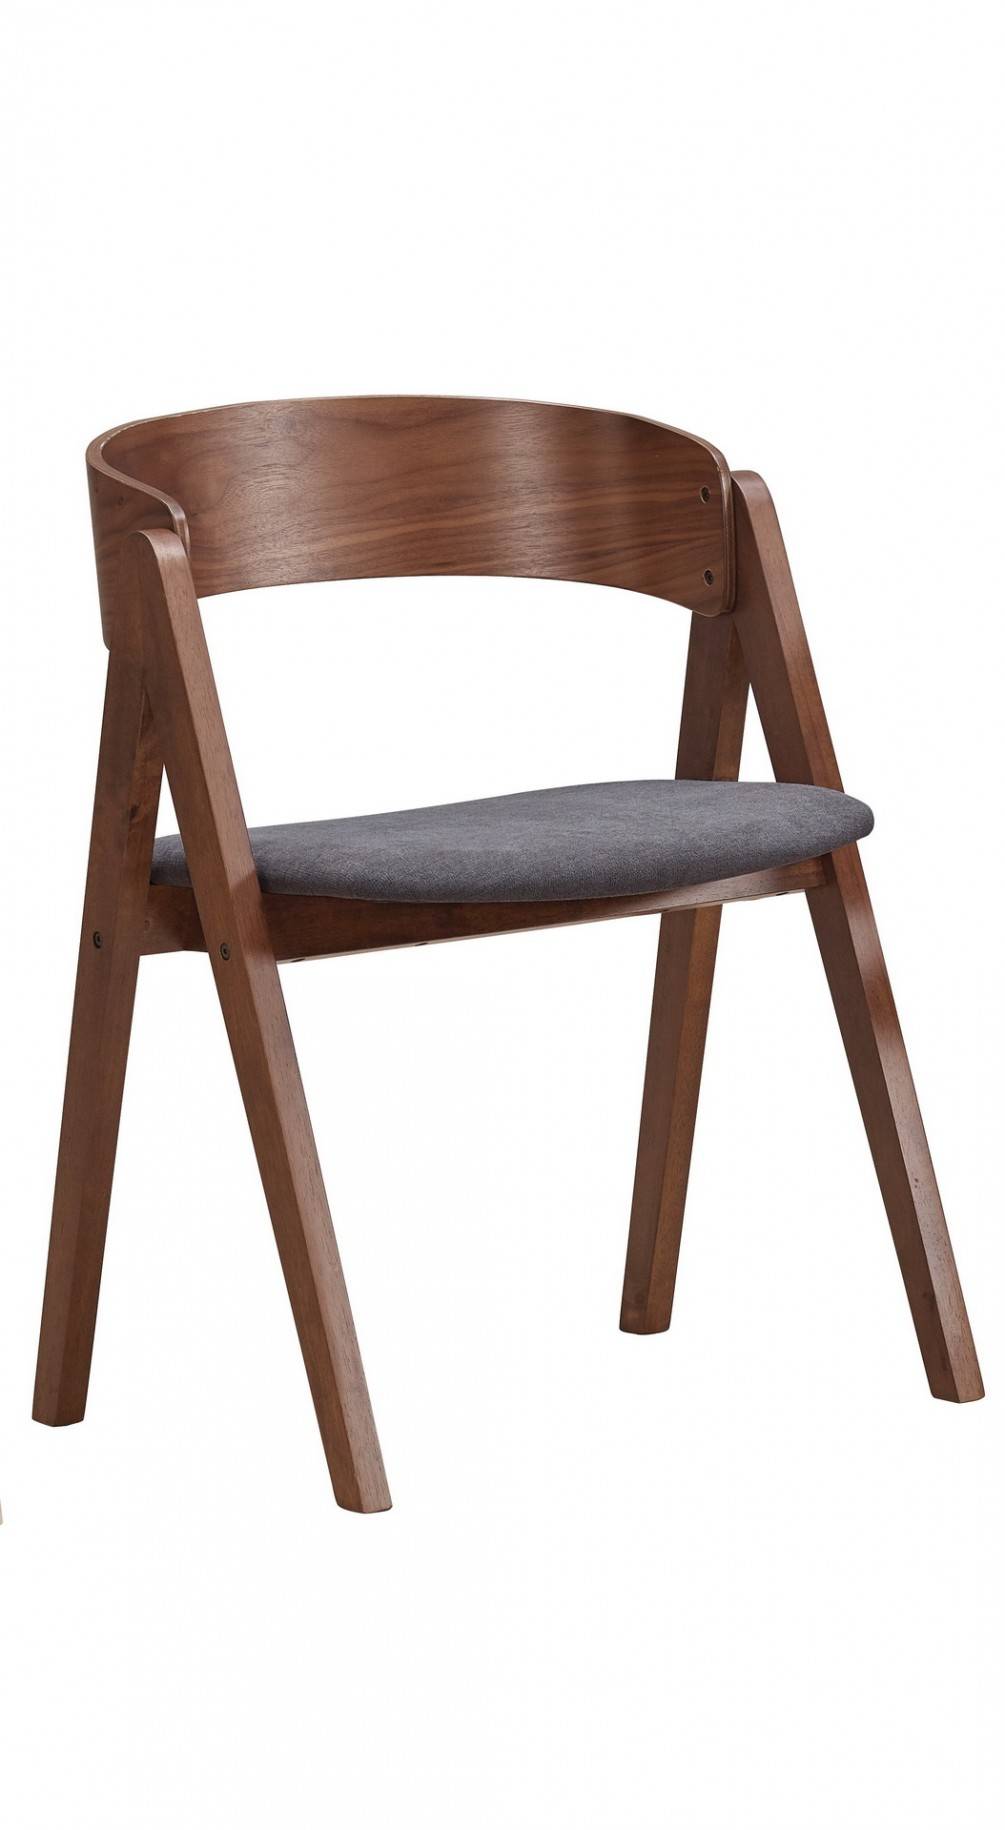 QM-1069-11 特威爾餐椅(布)(實木) (不含其他產品)<br /> 尺寸:寬57.5*深52.5*高75cm